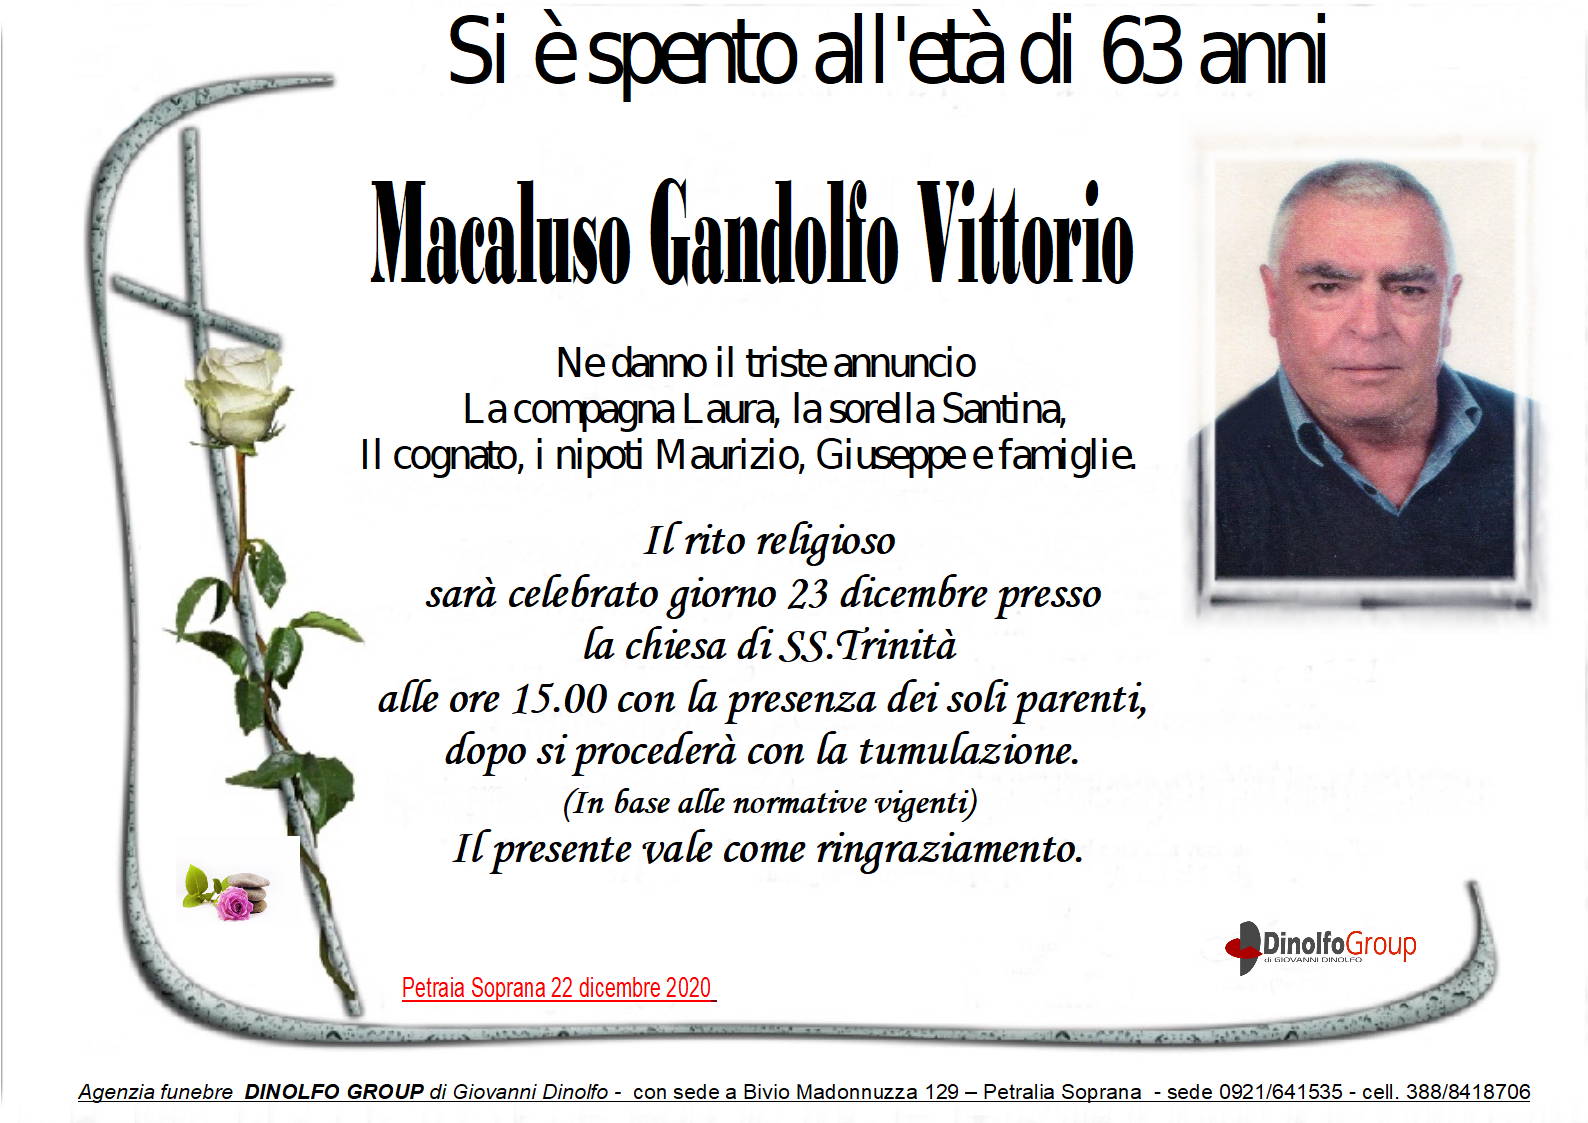 Gandolfo Vittorio Macaluso